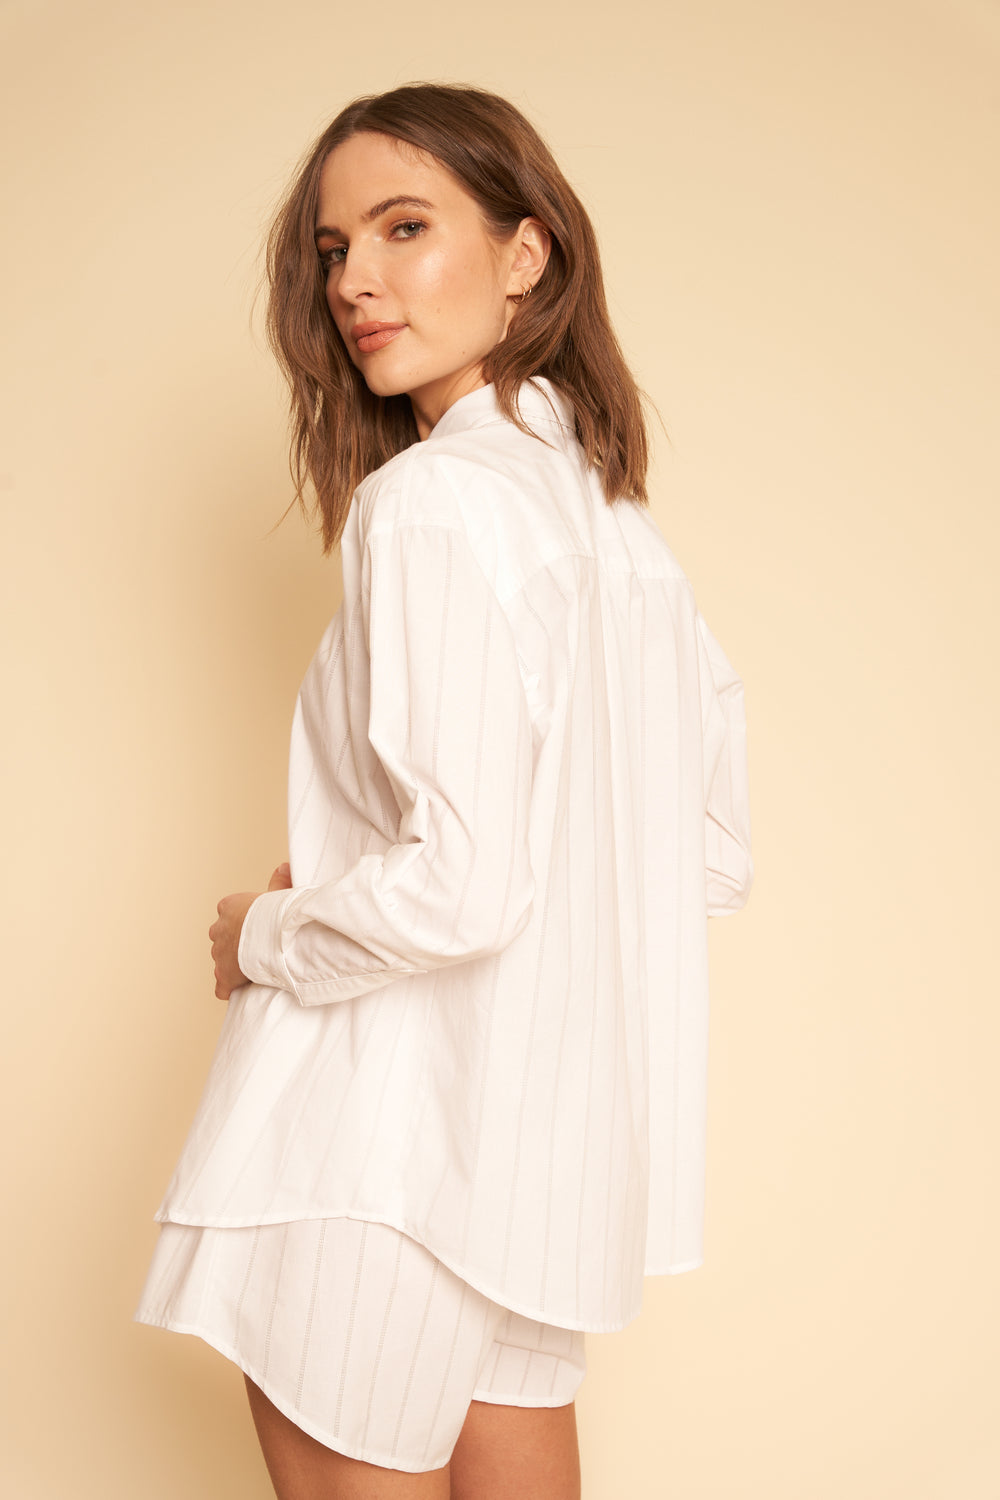 Peri Shirt in White Poplin - Whimsy & Row